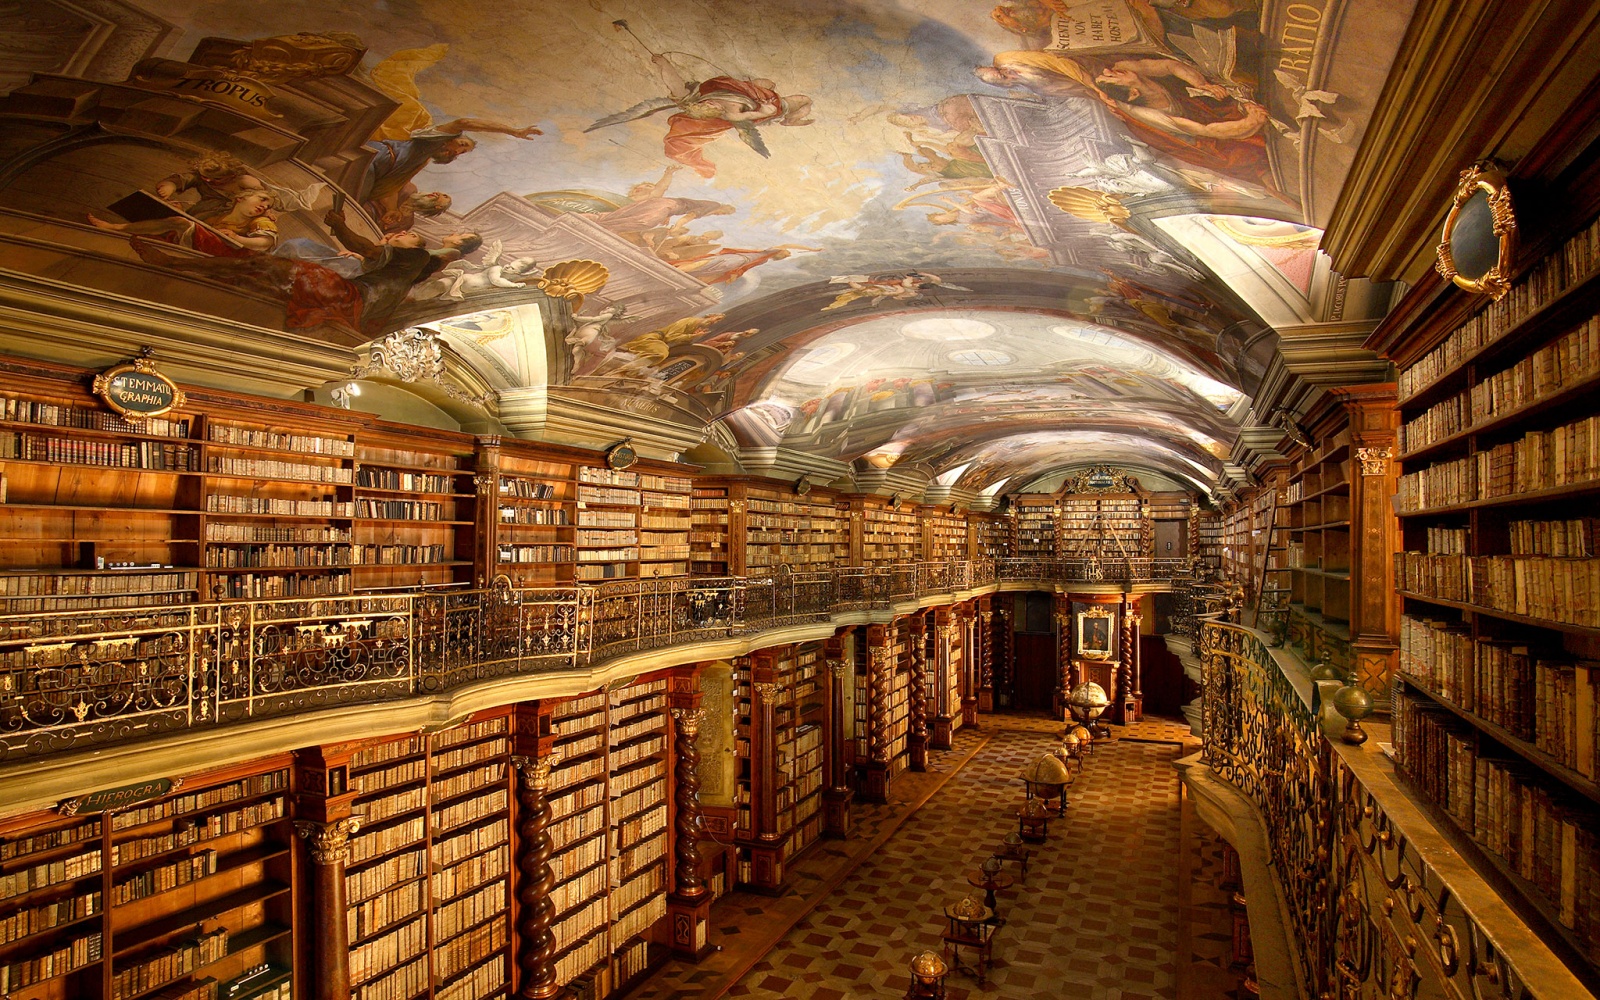 201407-w-most-beautiful-libraries-in-the-world-klementinum-prague.jpg